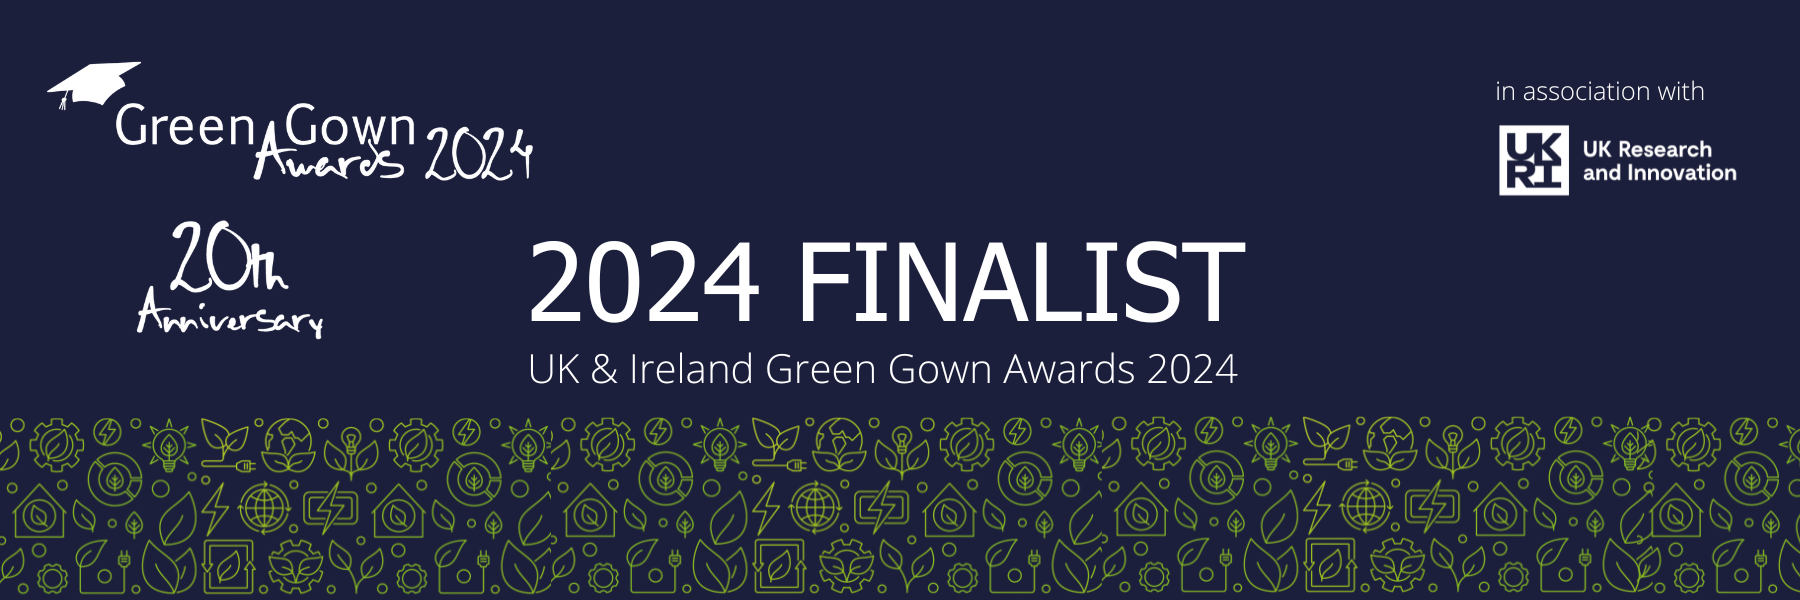 Green Gown 2024 Finalist Banner